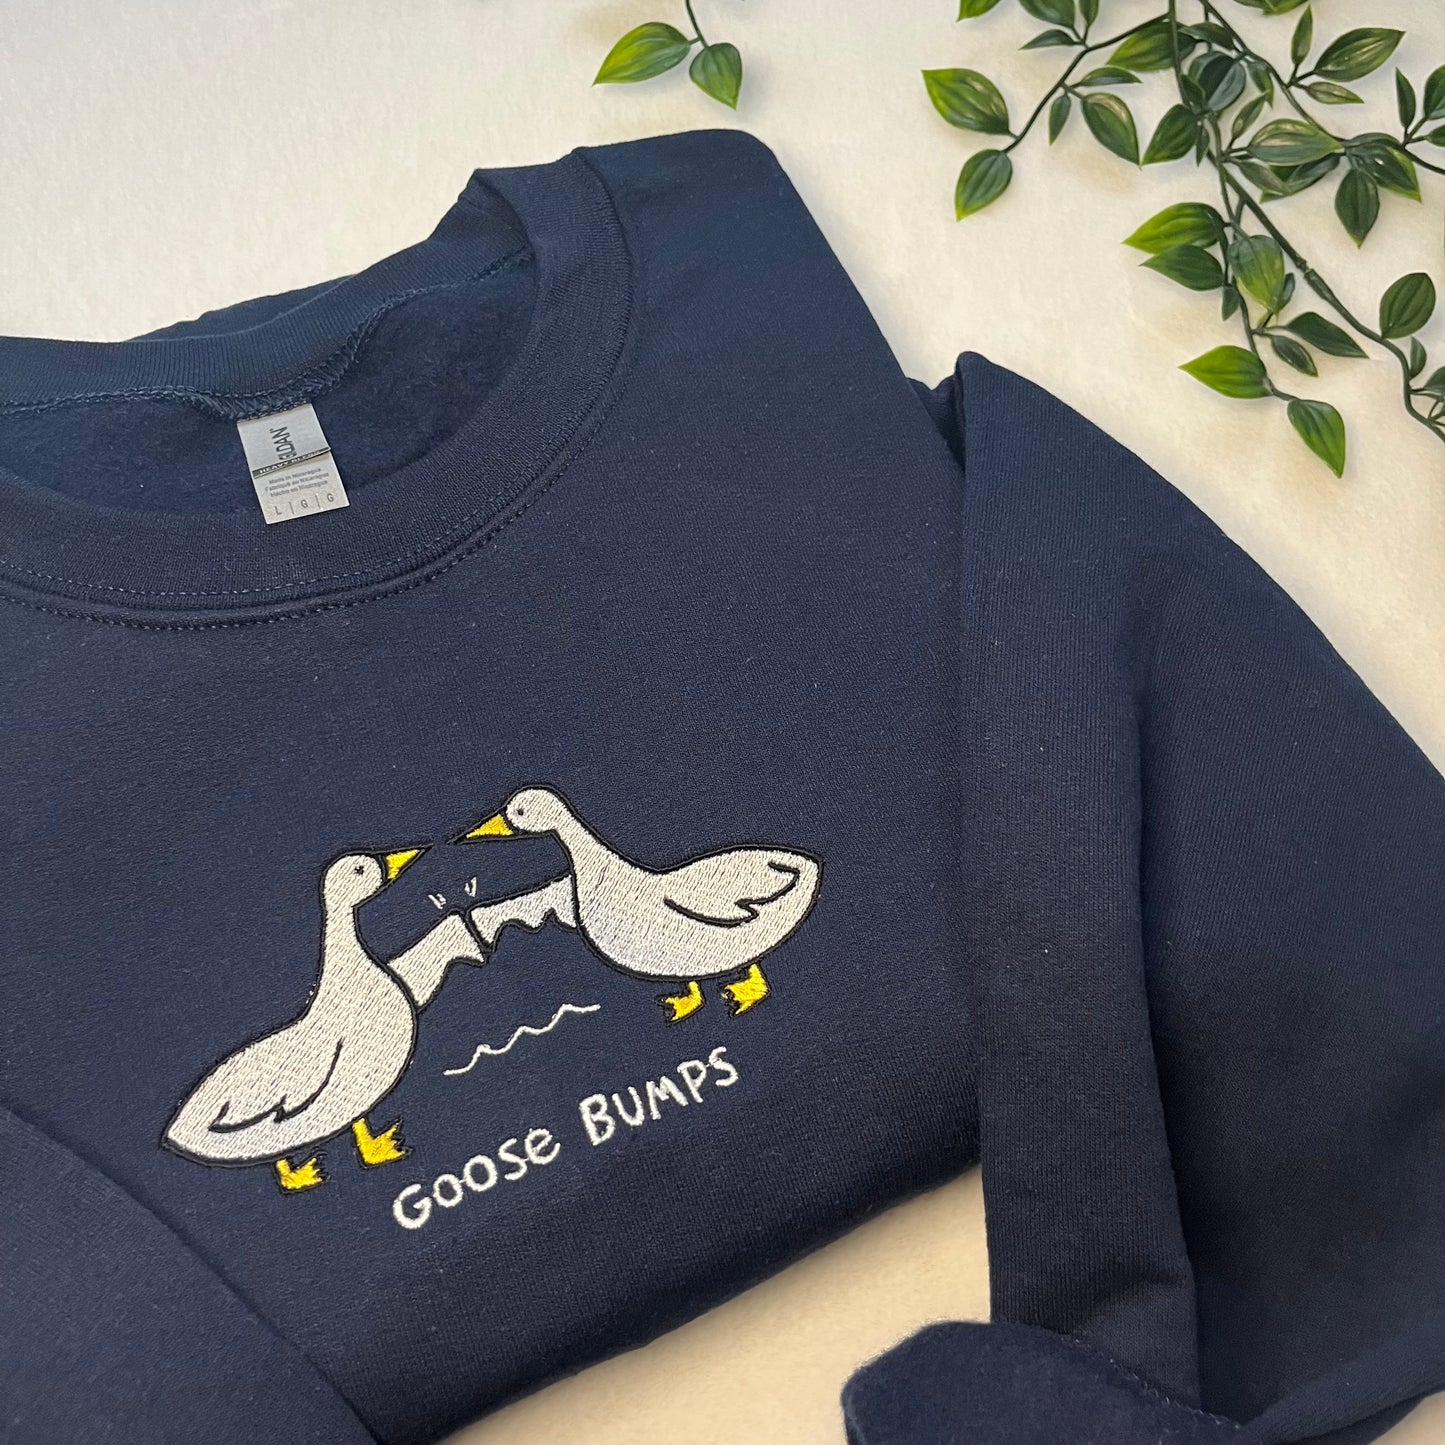 Goose Bumps Embroidered Sweatshirt